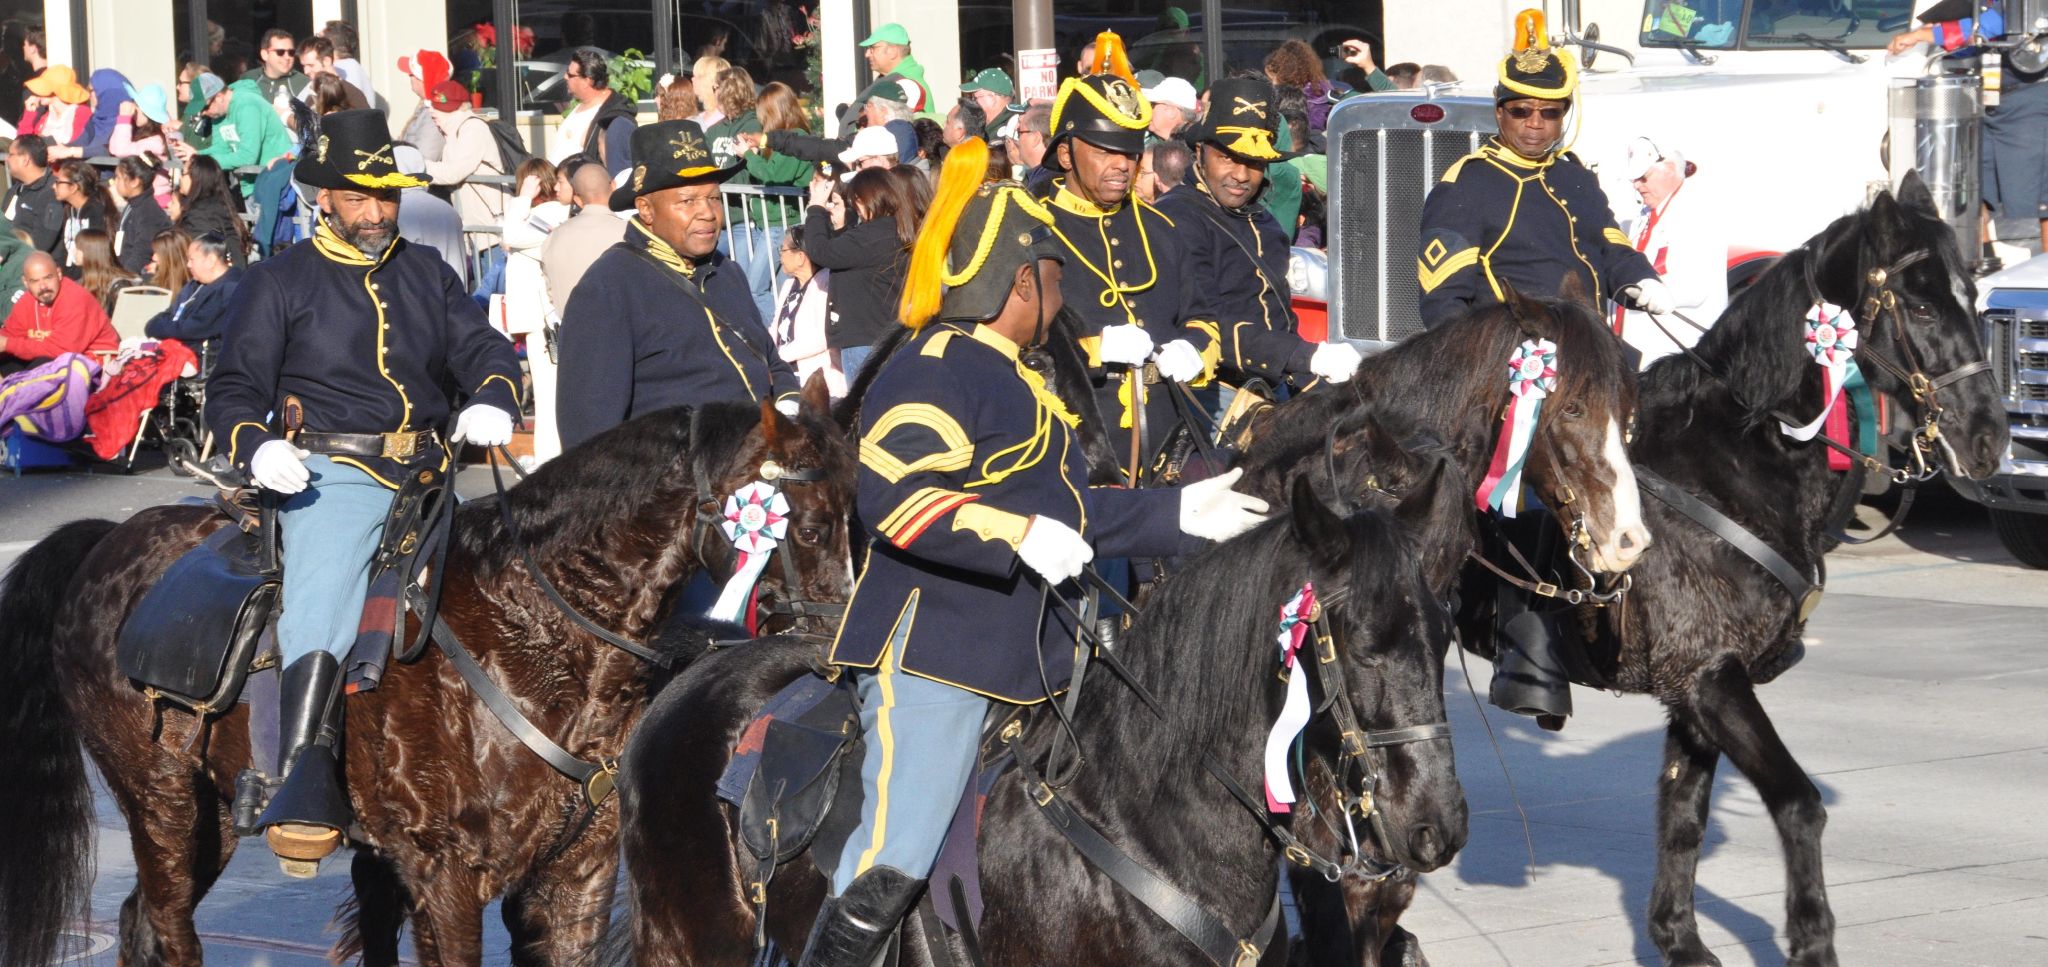 New Buffalo Soldiers (b), Tournament of Roses Parade, Pasadena, CA - 2014-01-01